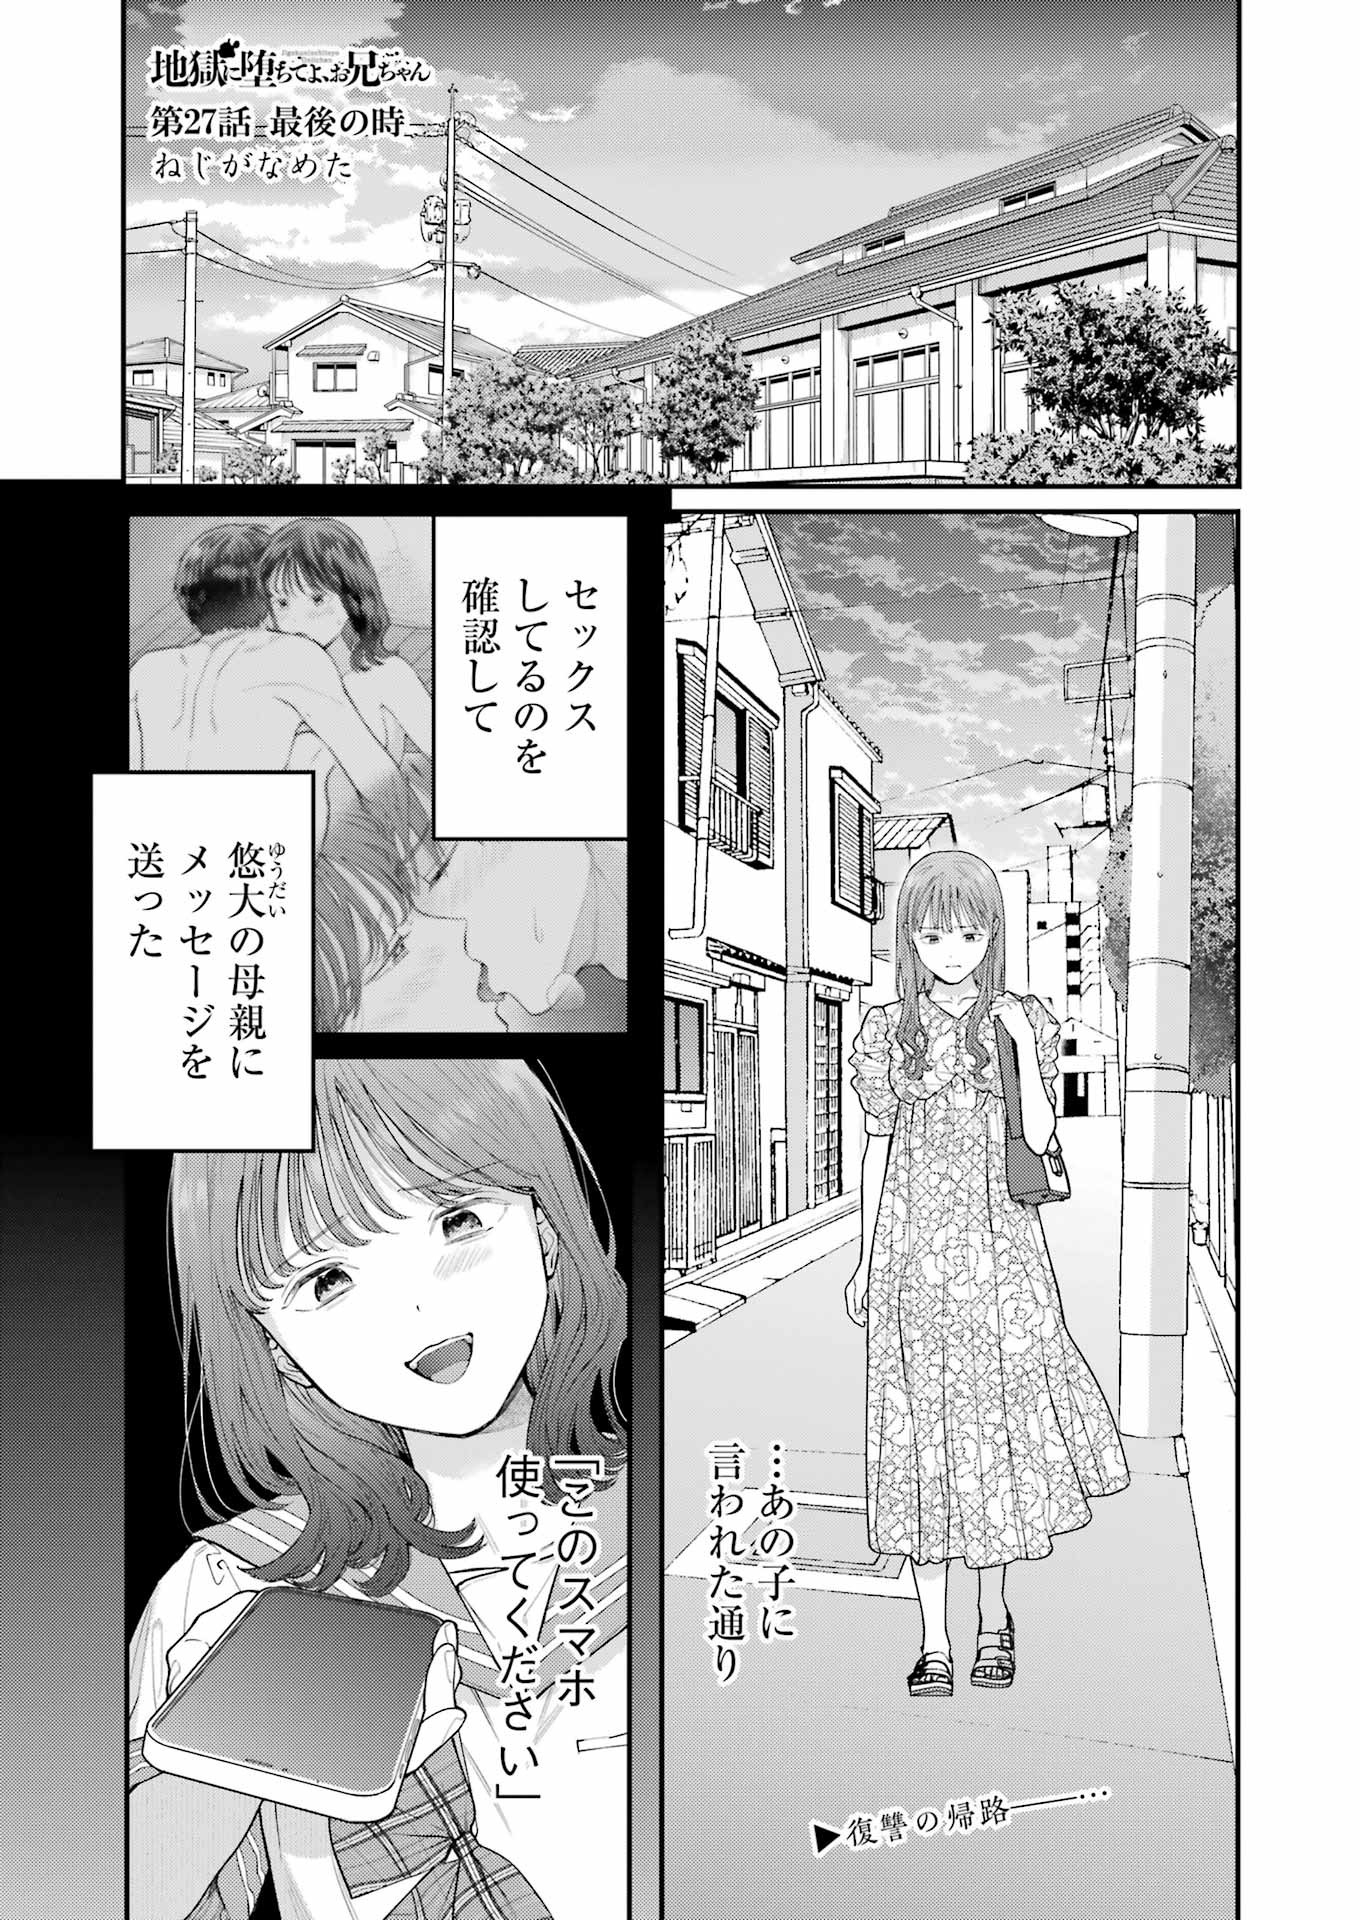 Jigoku ni Ochite yo, Onii-chan - Chapter 27 - Page 1